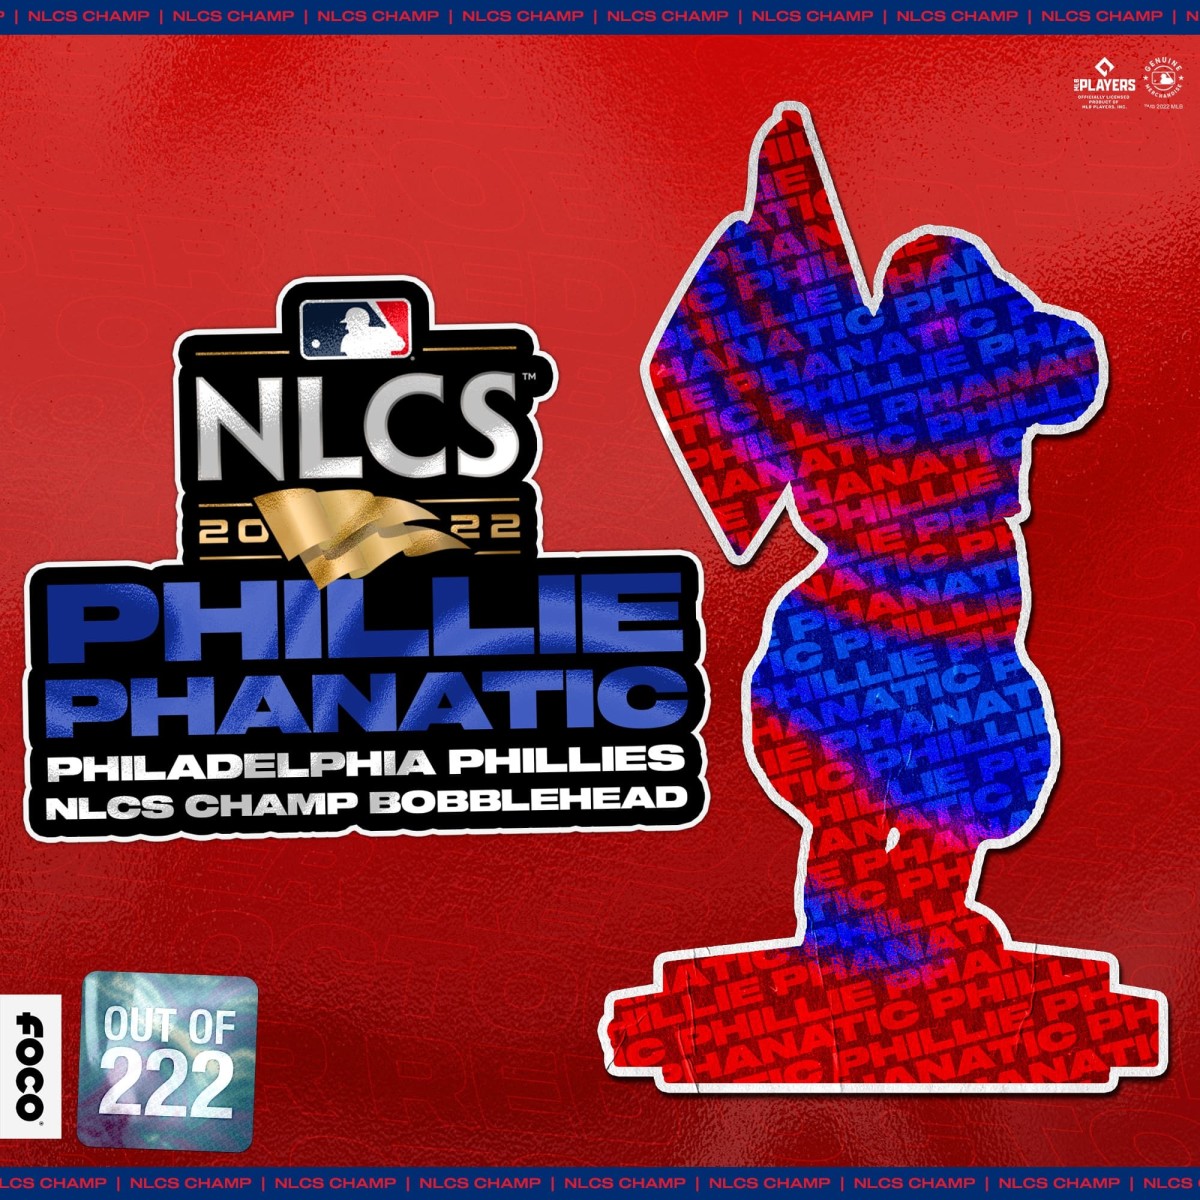 Phillie Phanatic NLCS Champ Bobblehead